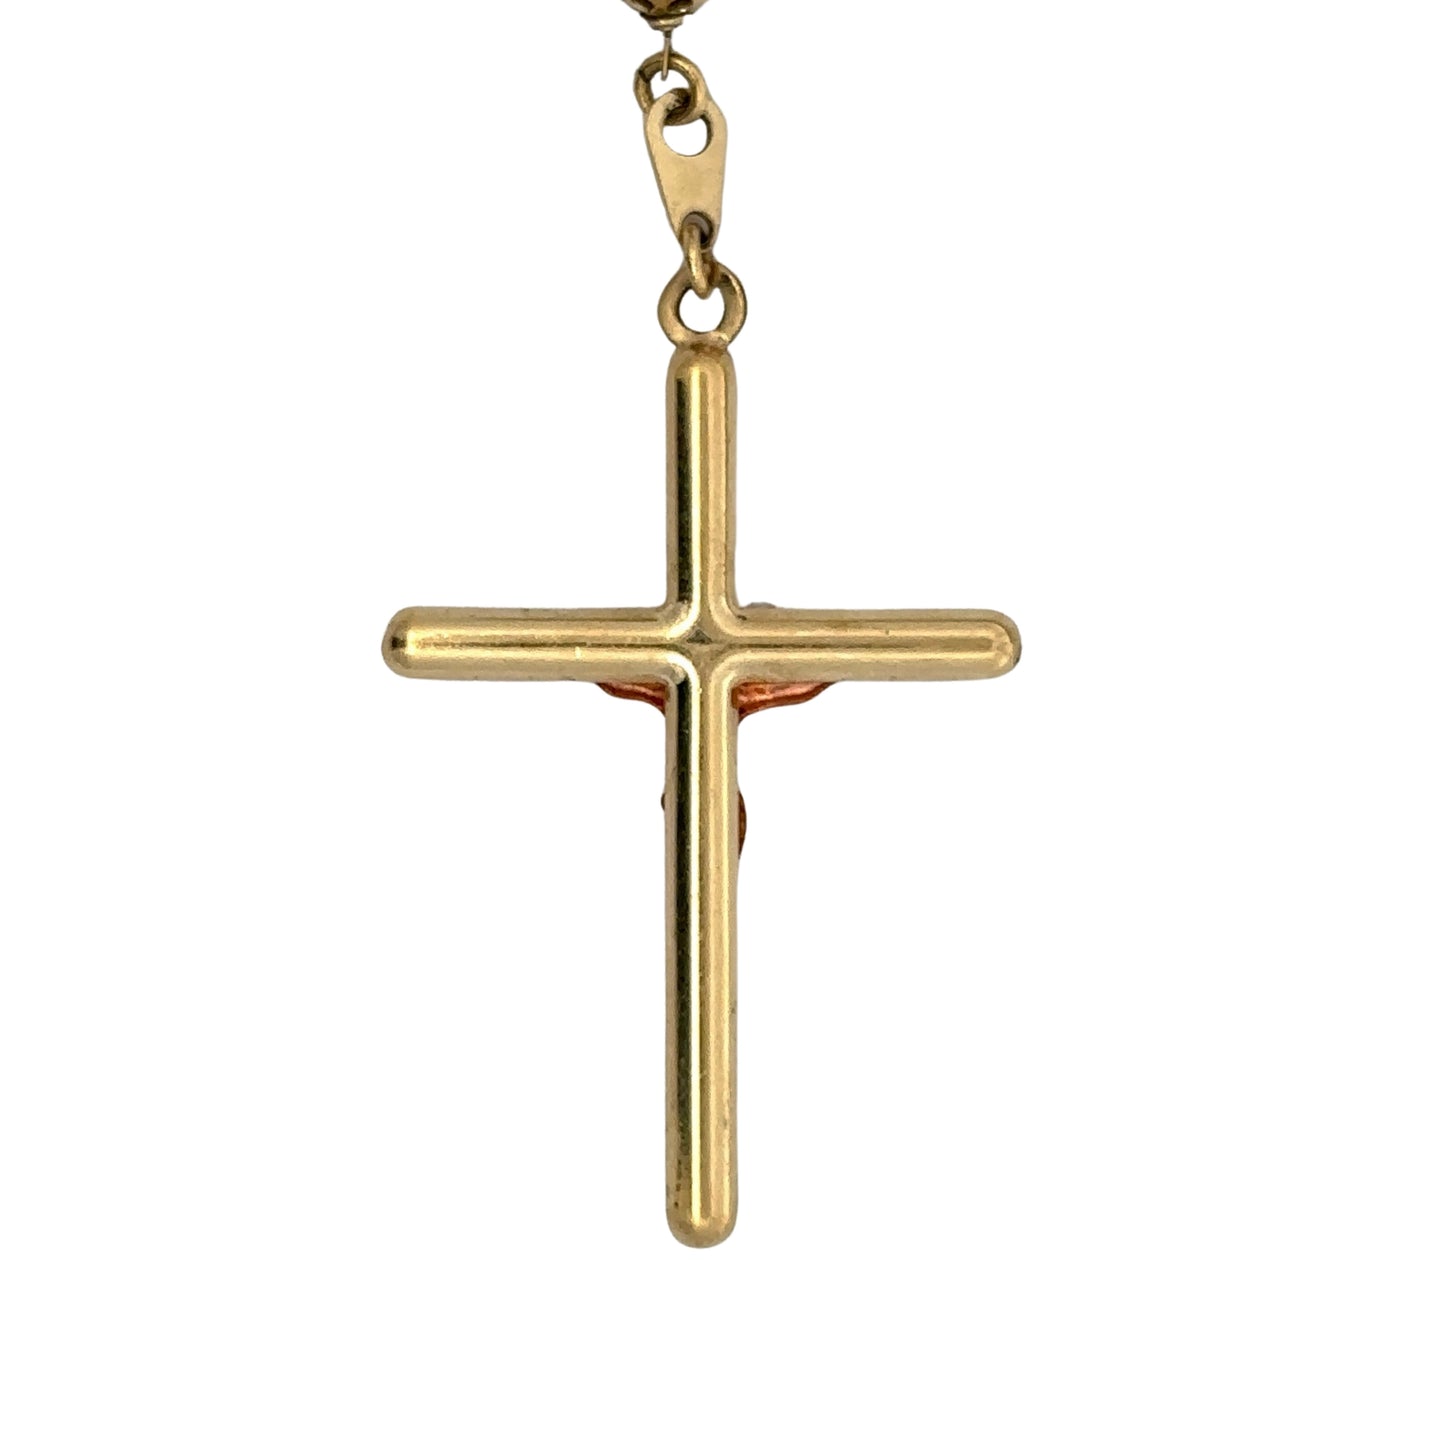 back of cross pendant